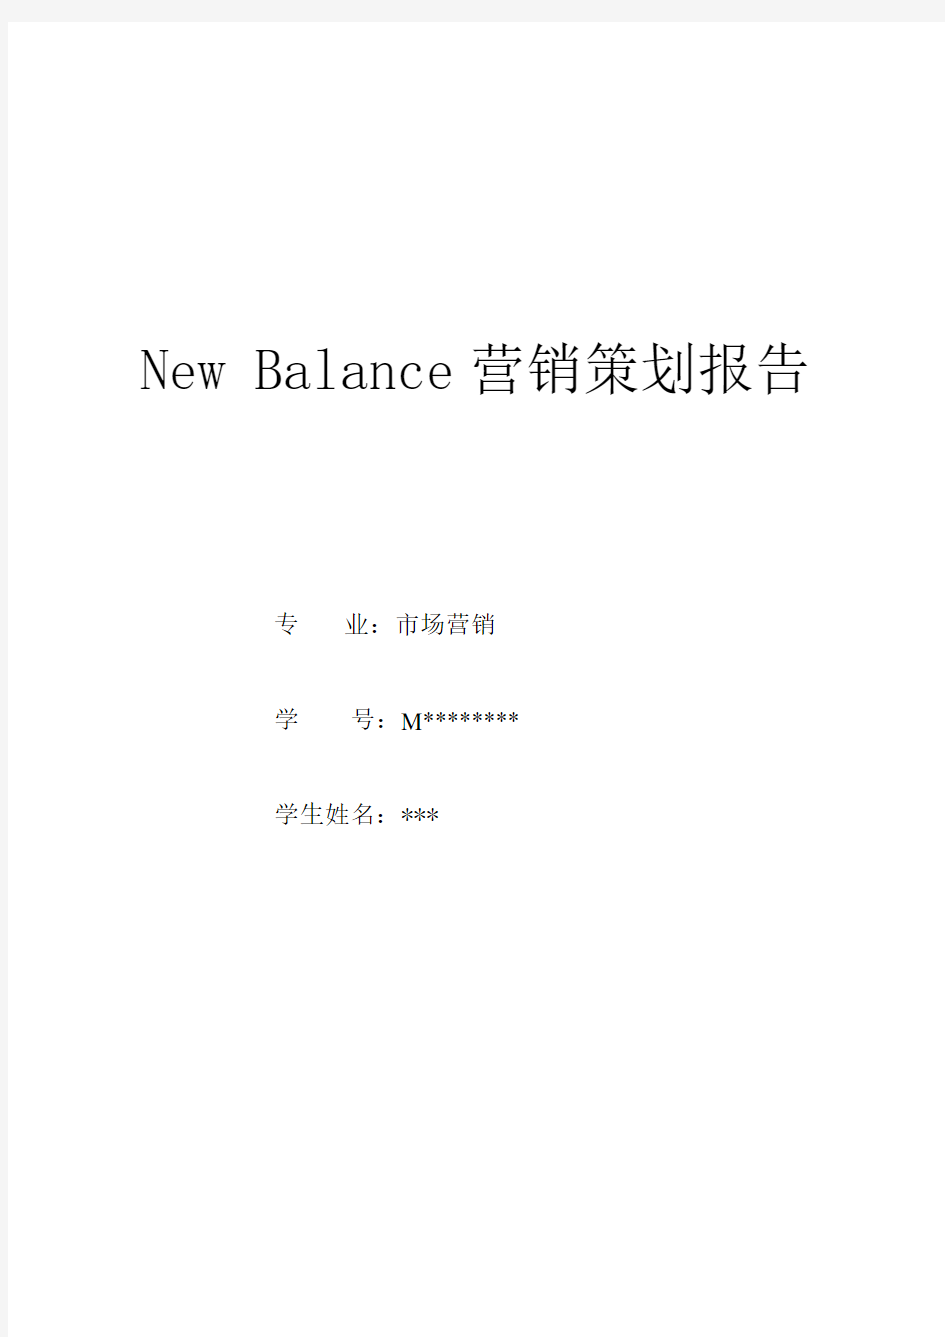 New Balance 营销策划报告